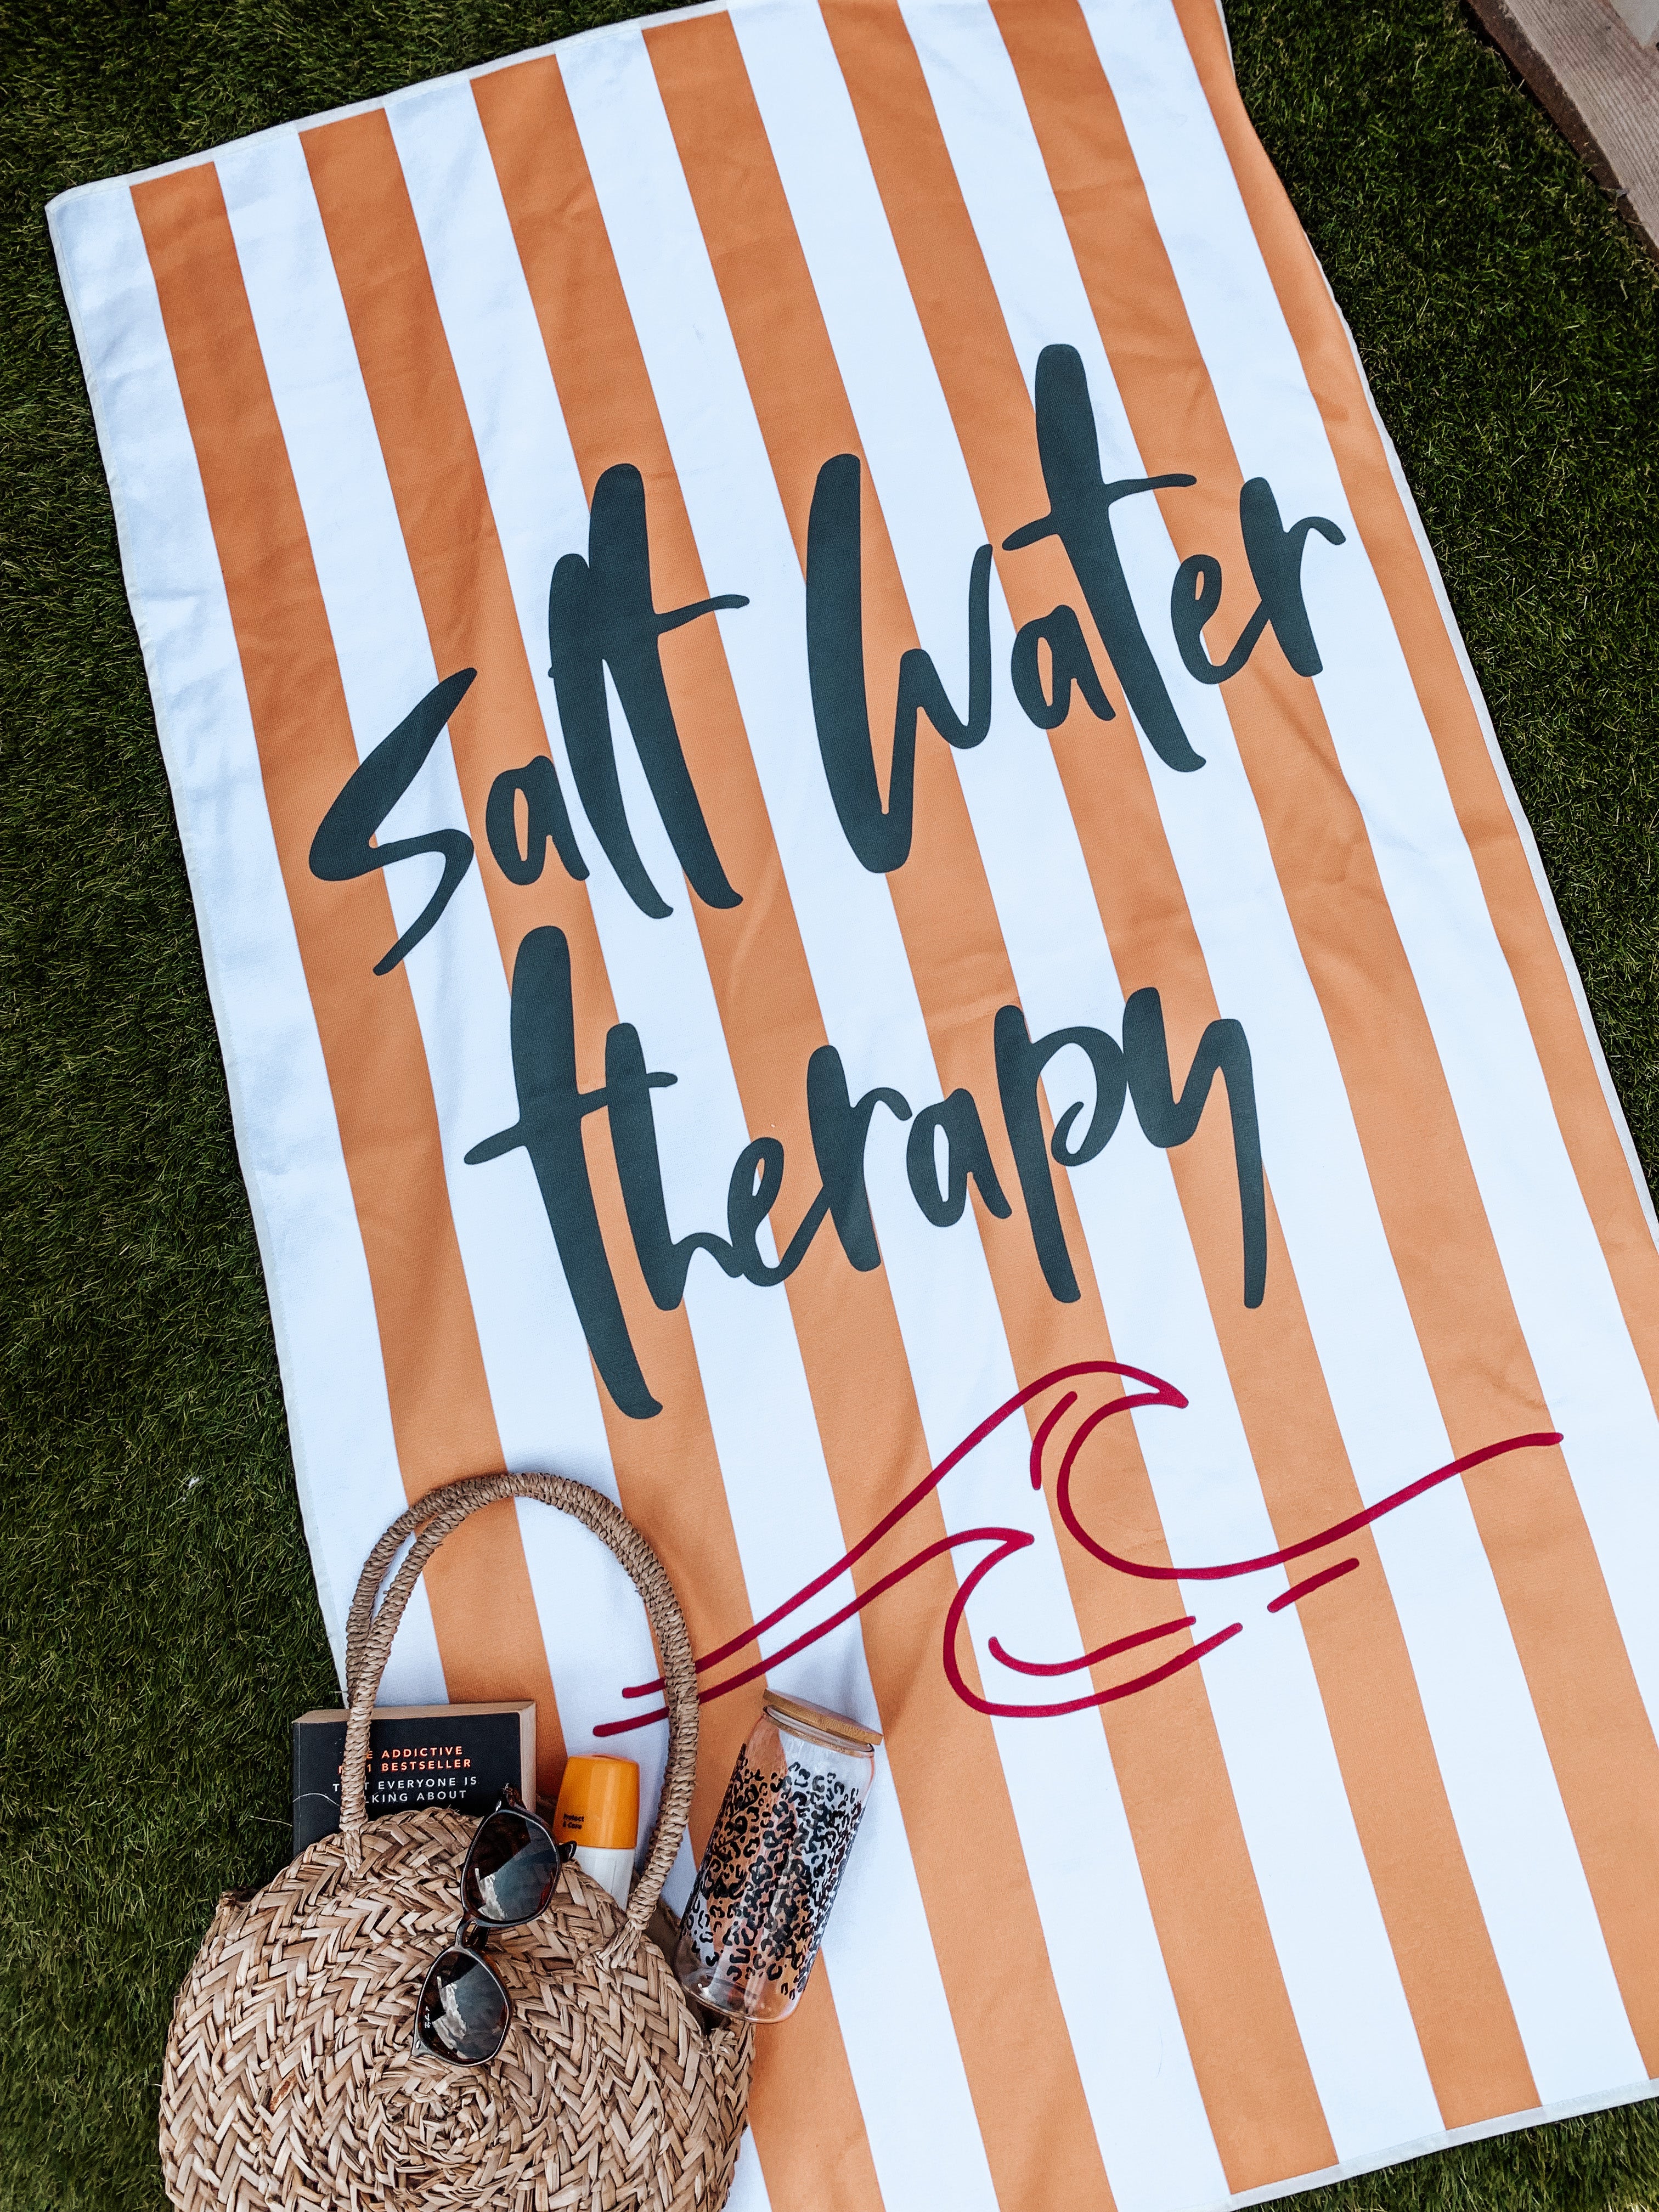 Beach towel - Salt water therapy.  Summer essential